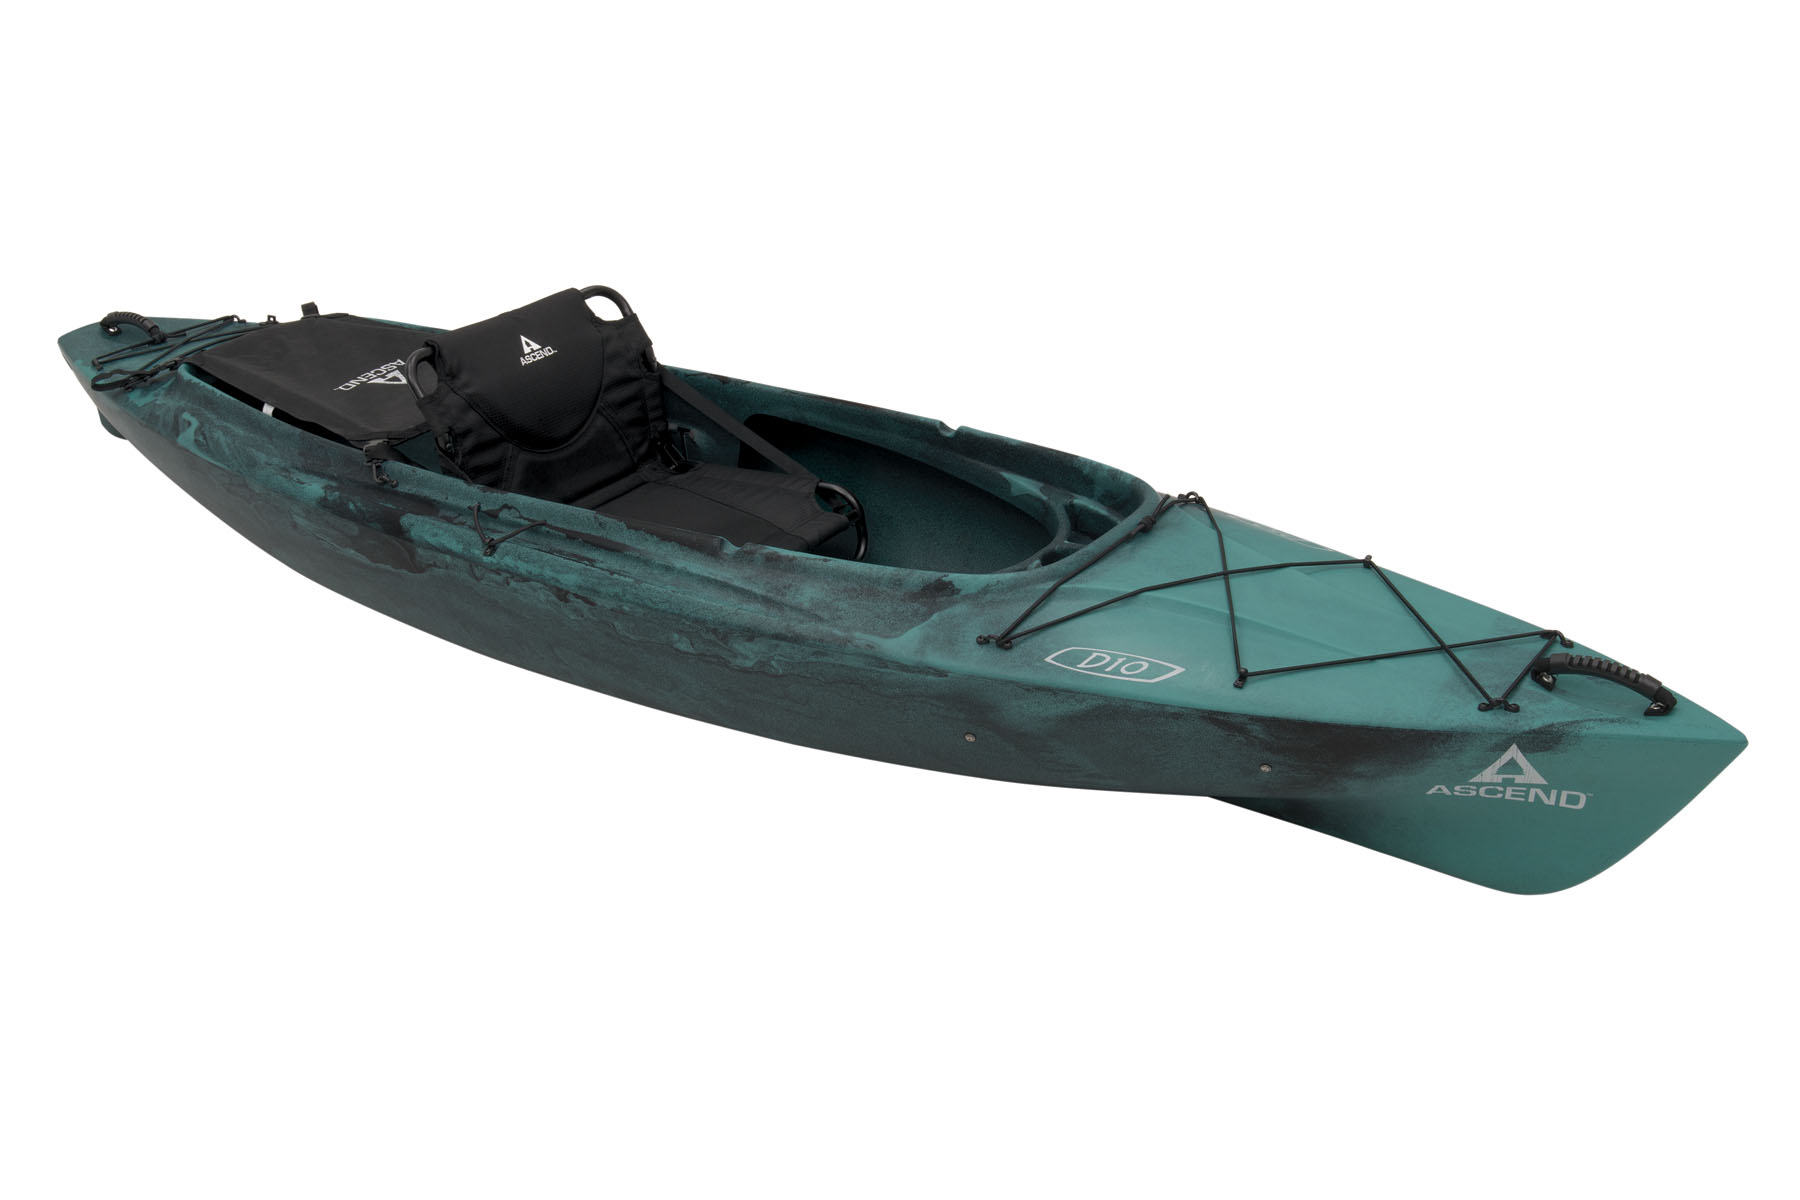 fishing kayak sale in All Categories in Ontario - Kijiji Canada